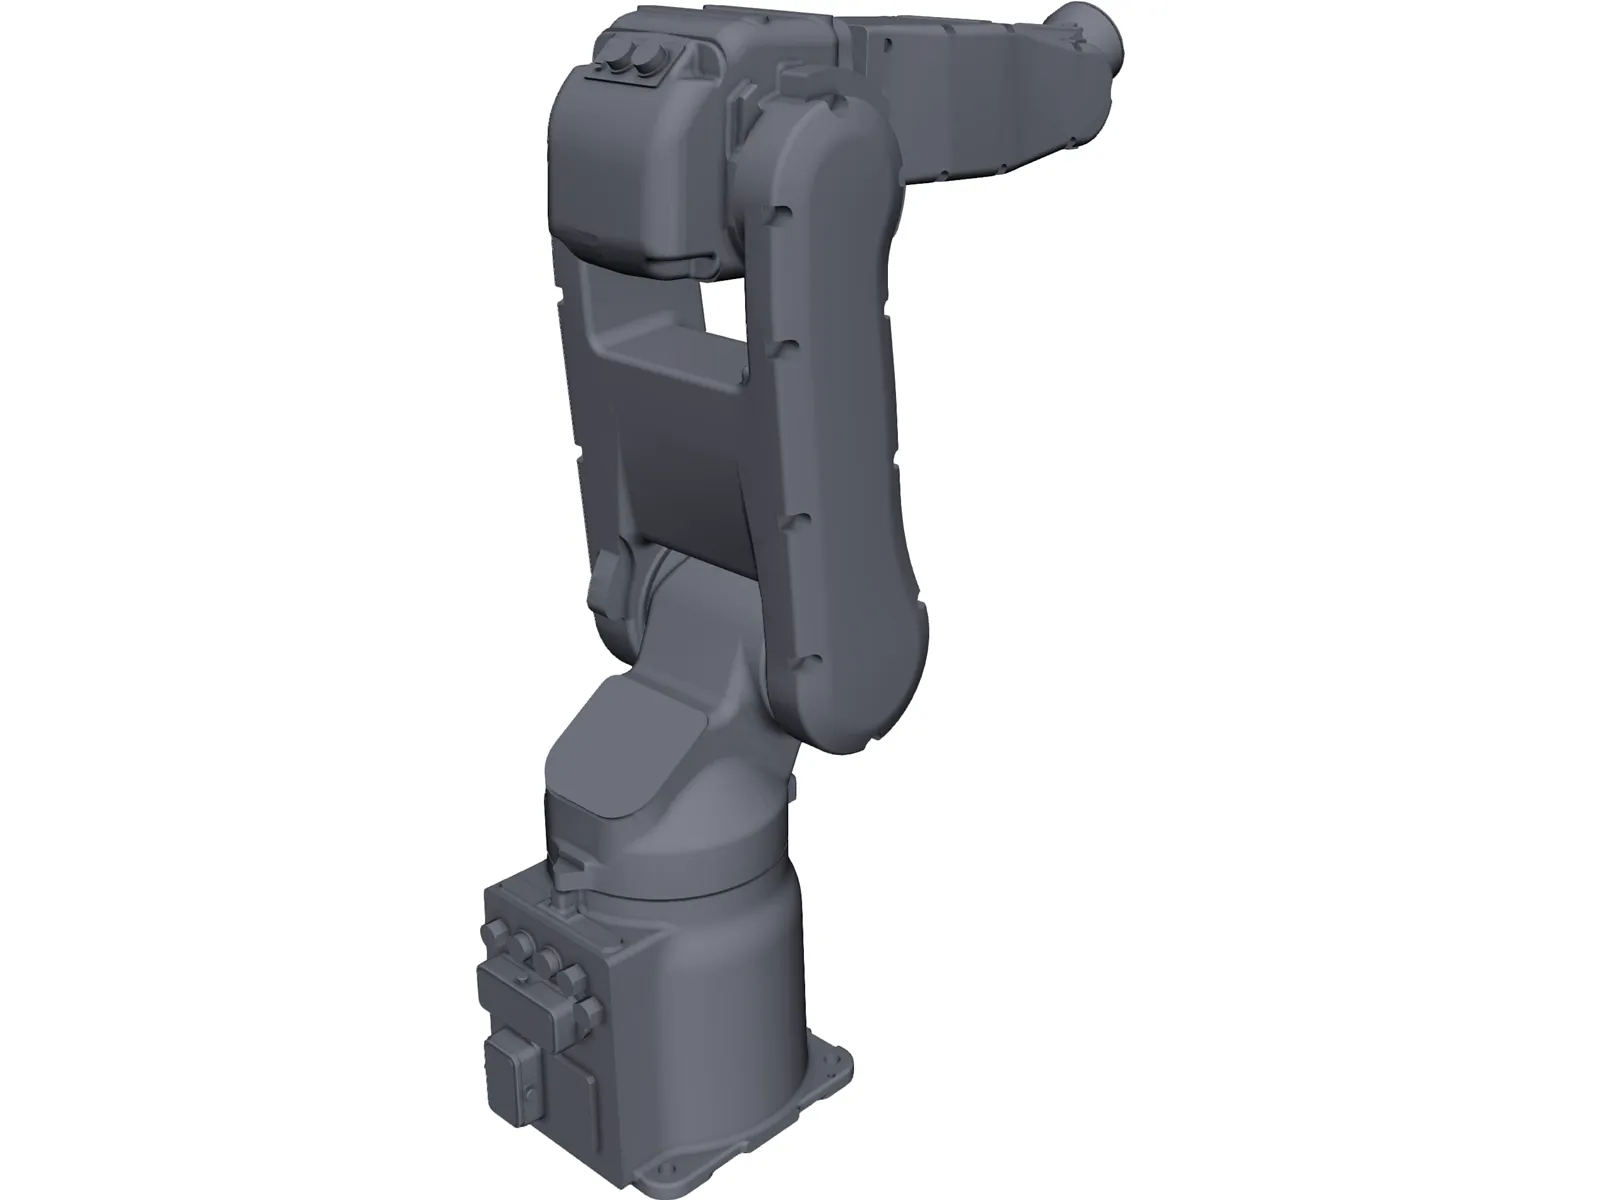 Motoman Robot MH6 3D Model